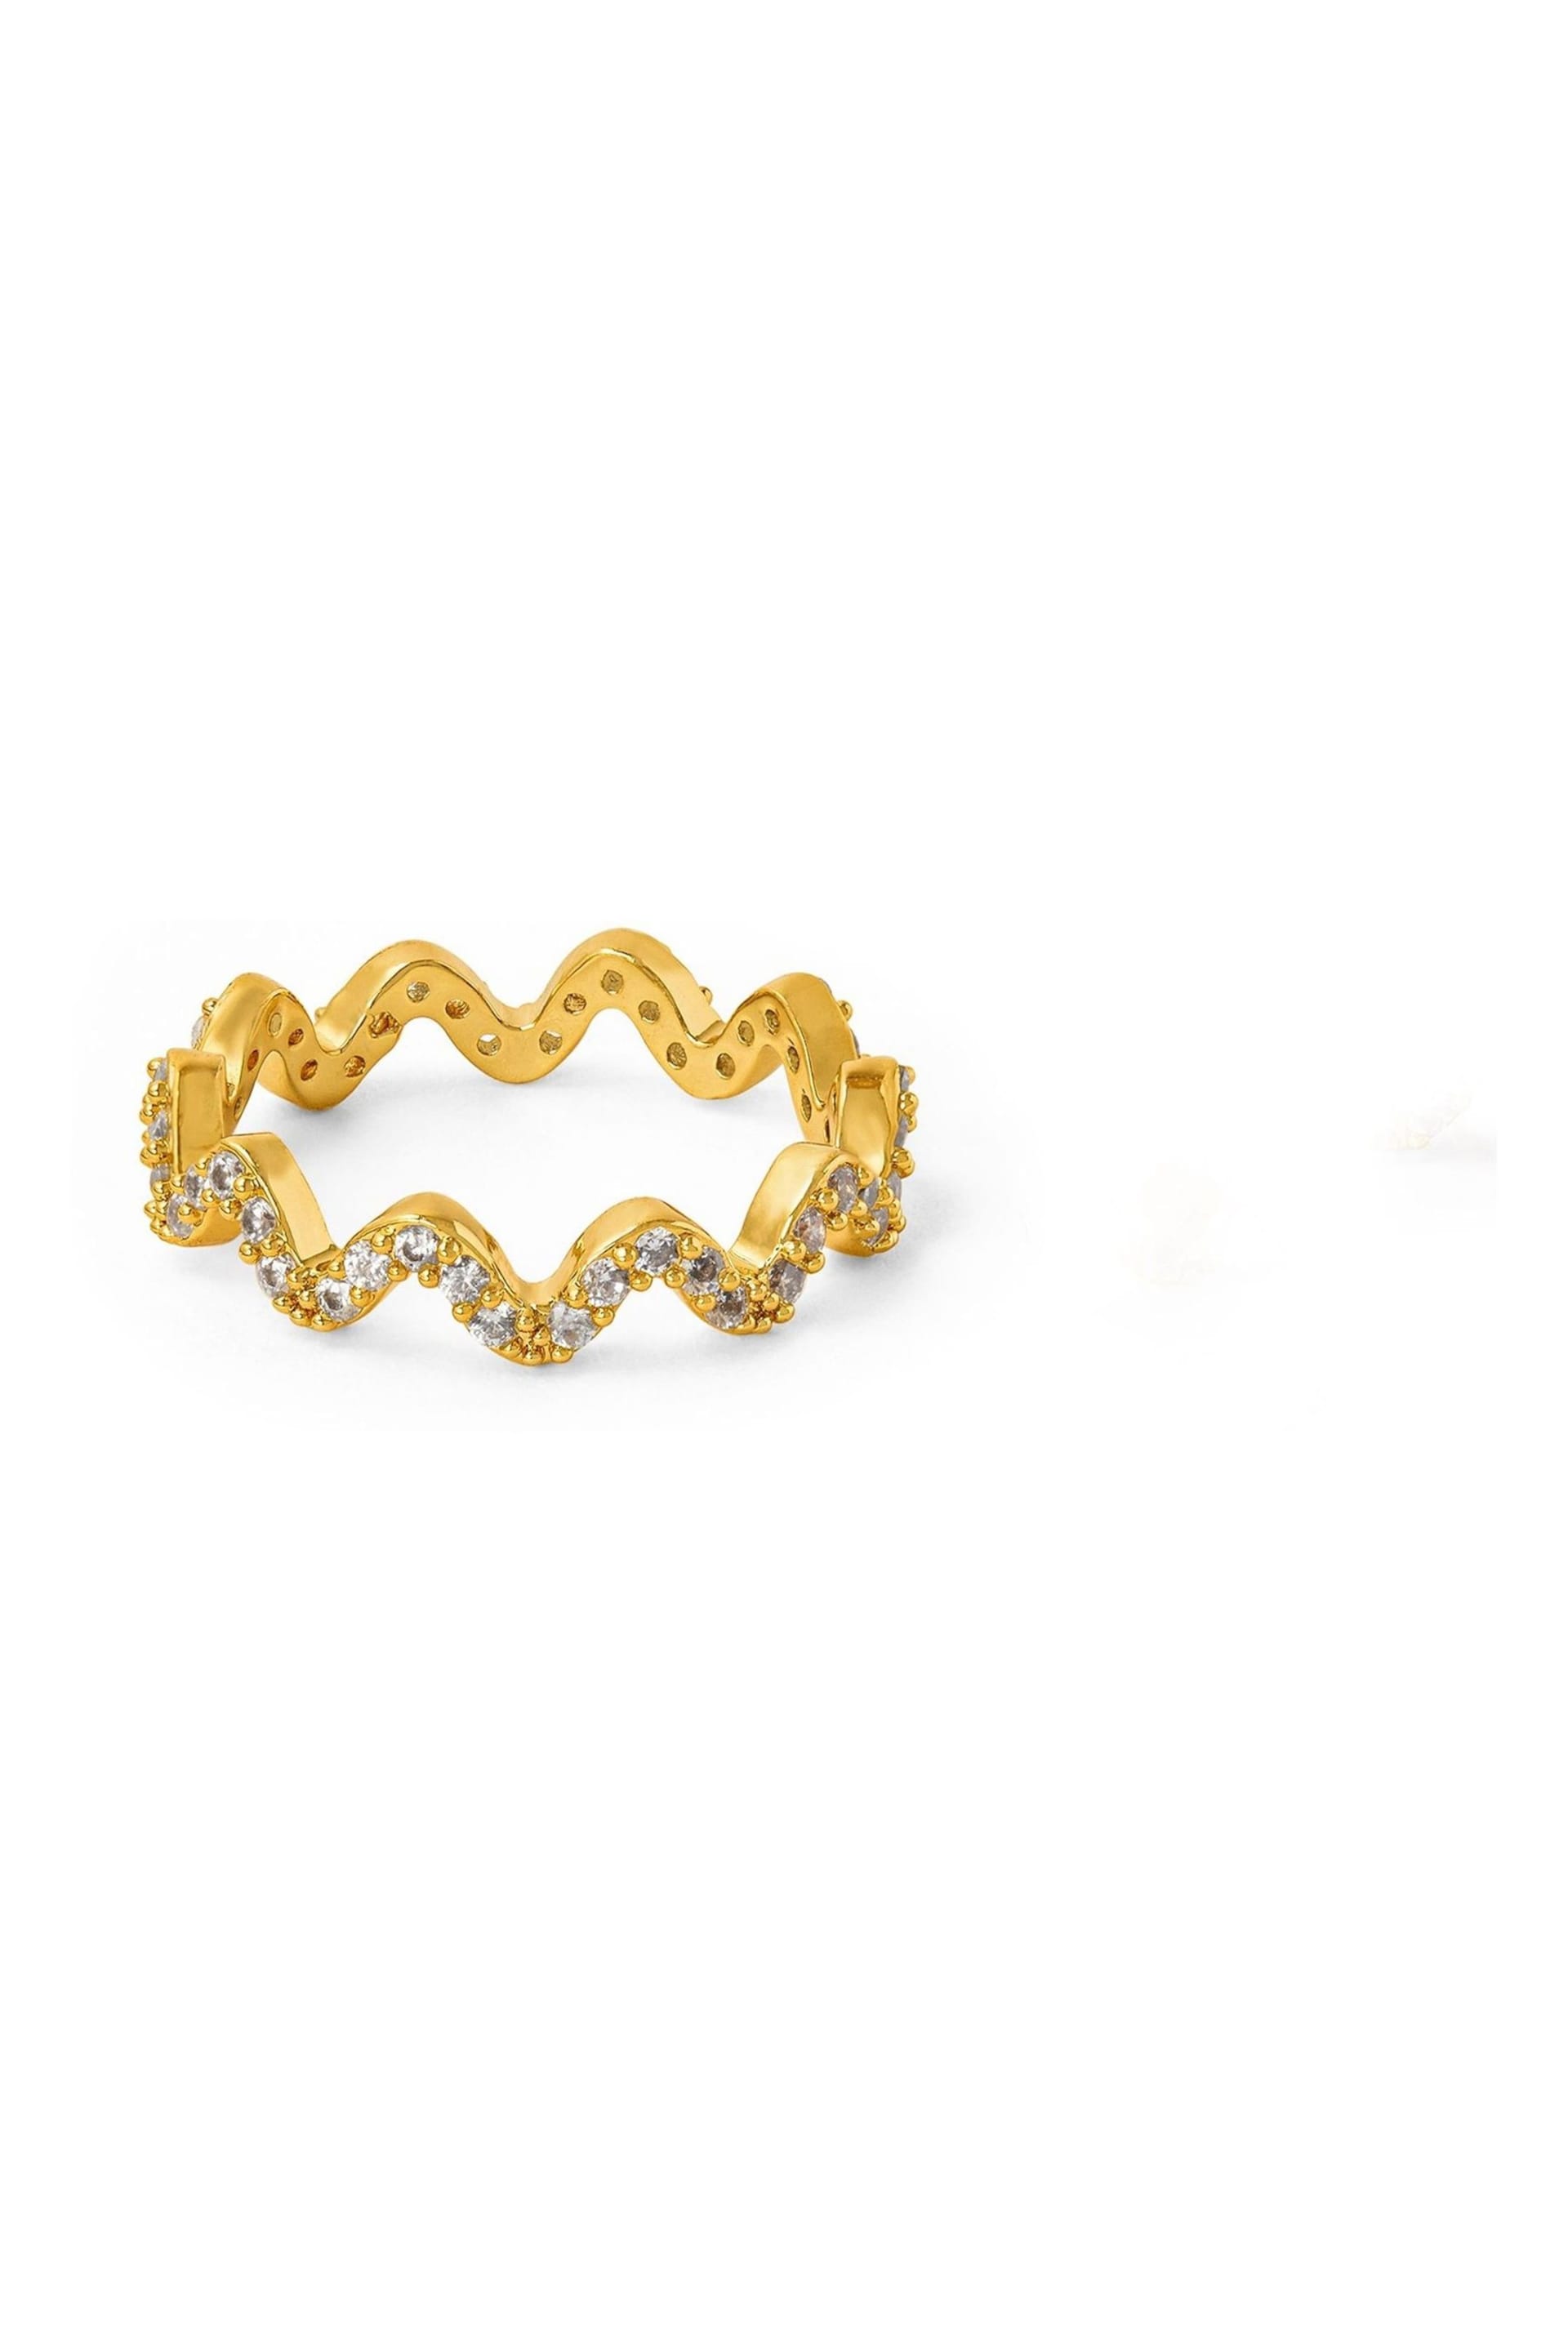 Orelia London 18k Gold Plating Pave Wave Ring - Image 2 of 2